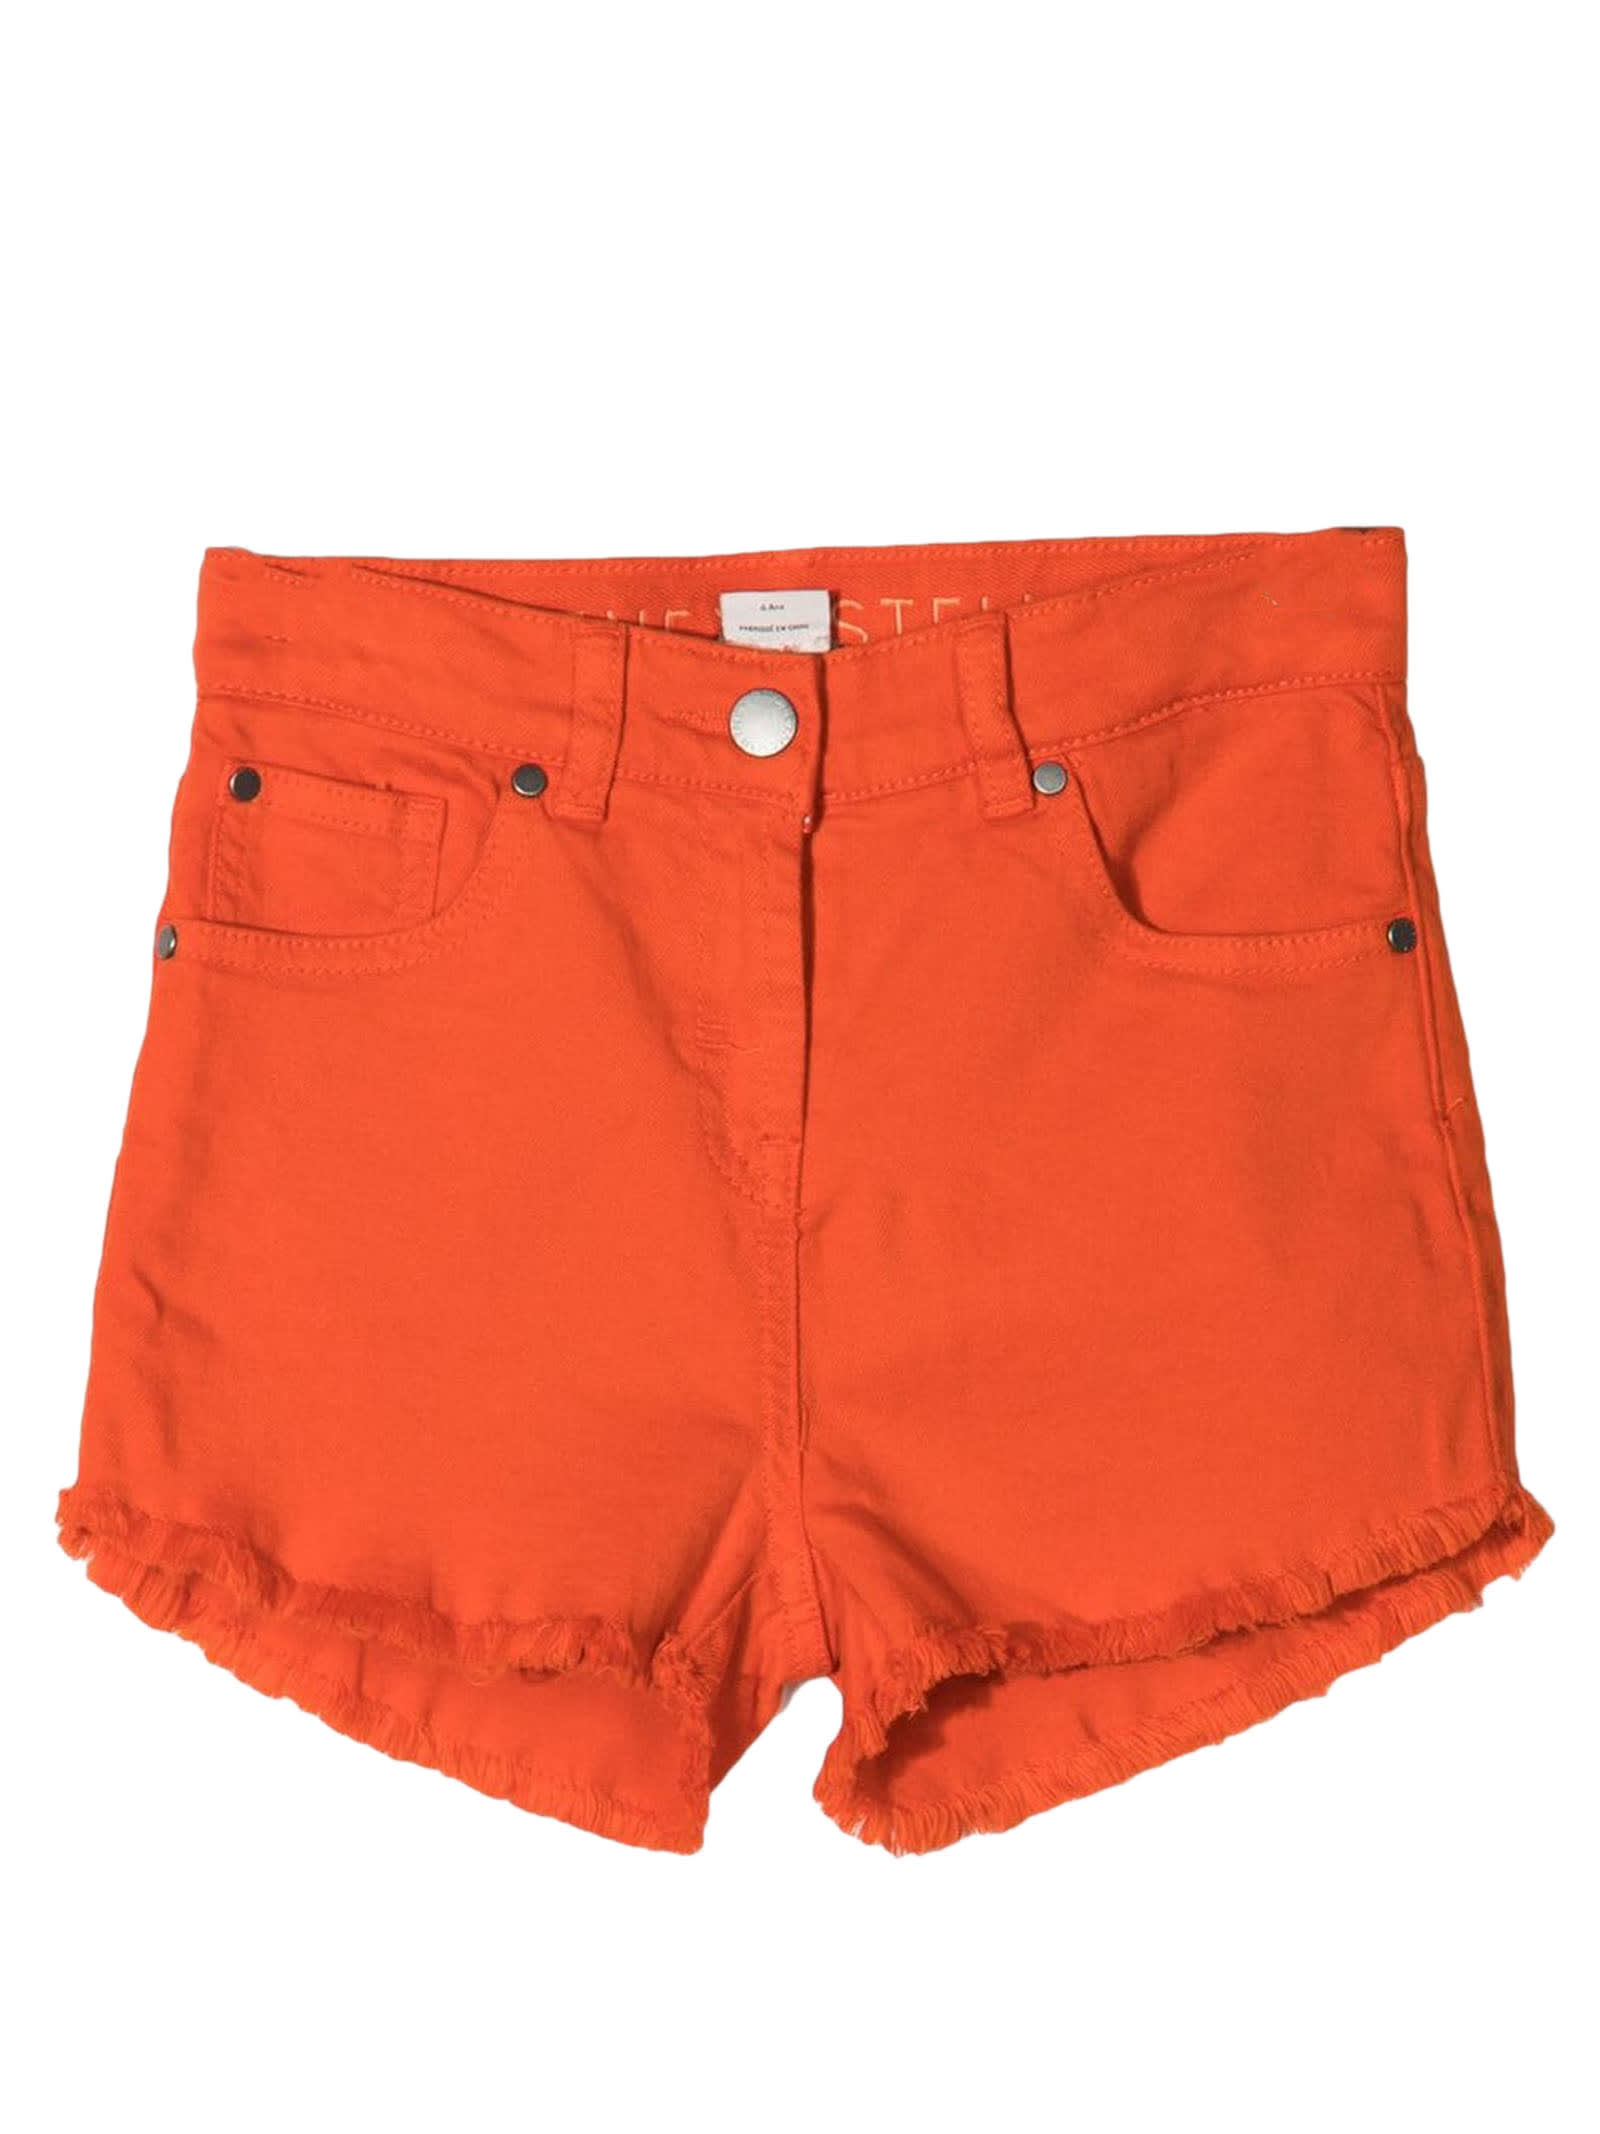 Stella McCartney Orange Stretch Cotton Shorts